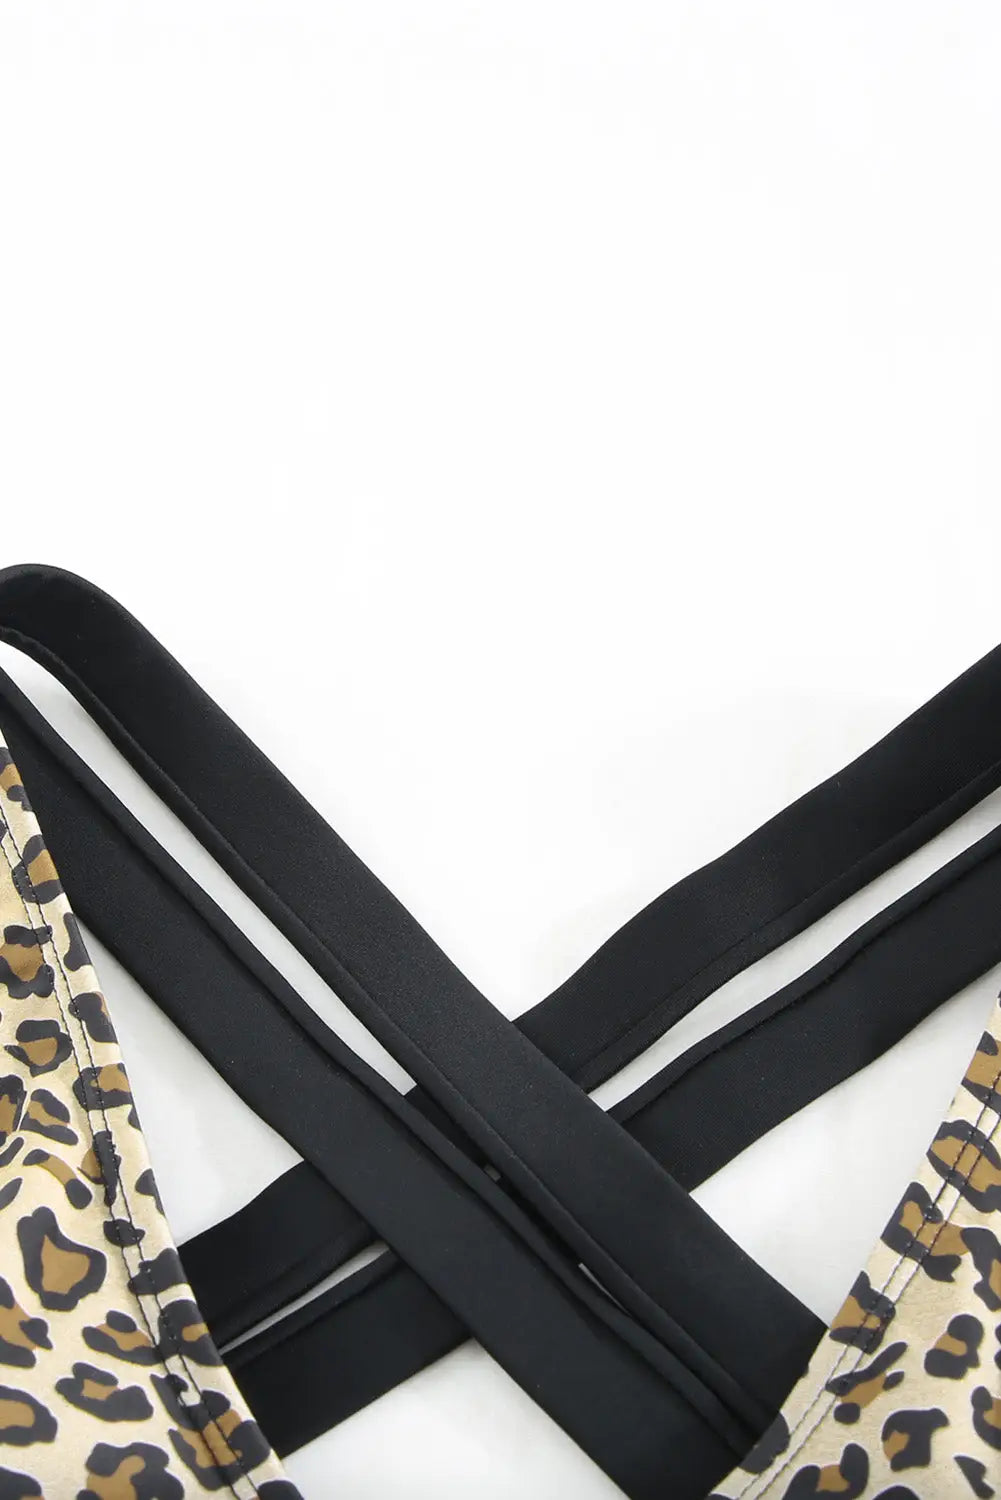 Leopard print criss cross back bikini set - bikinis